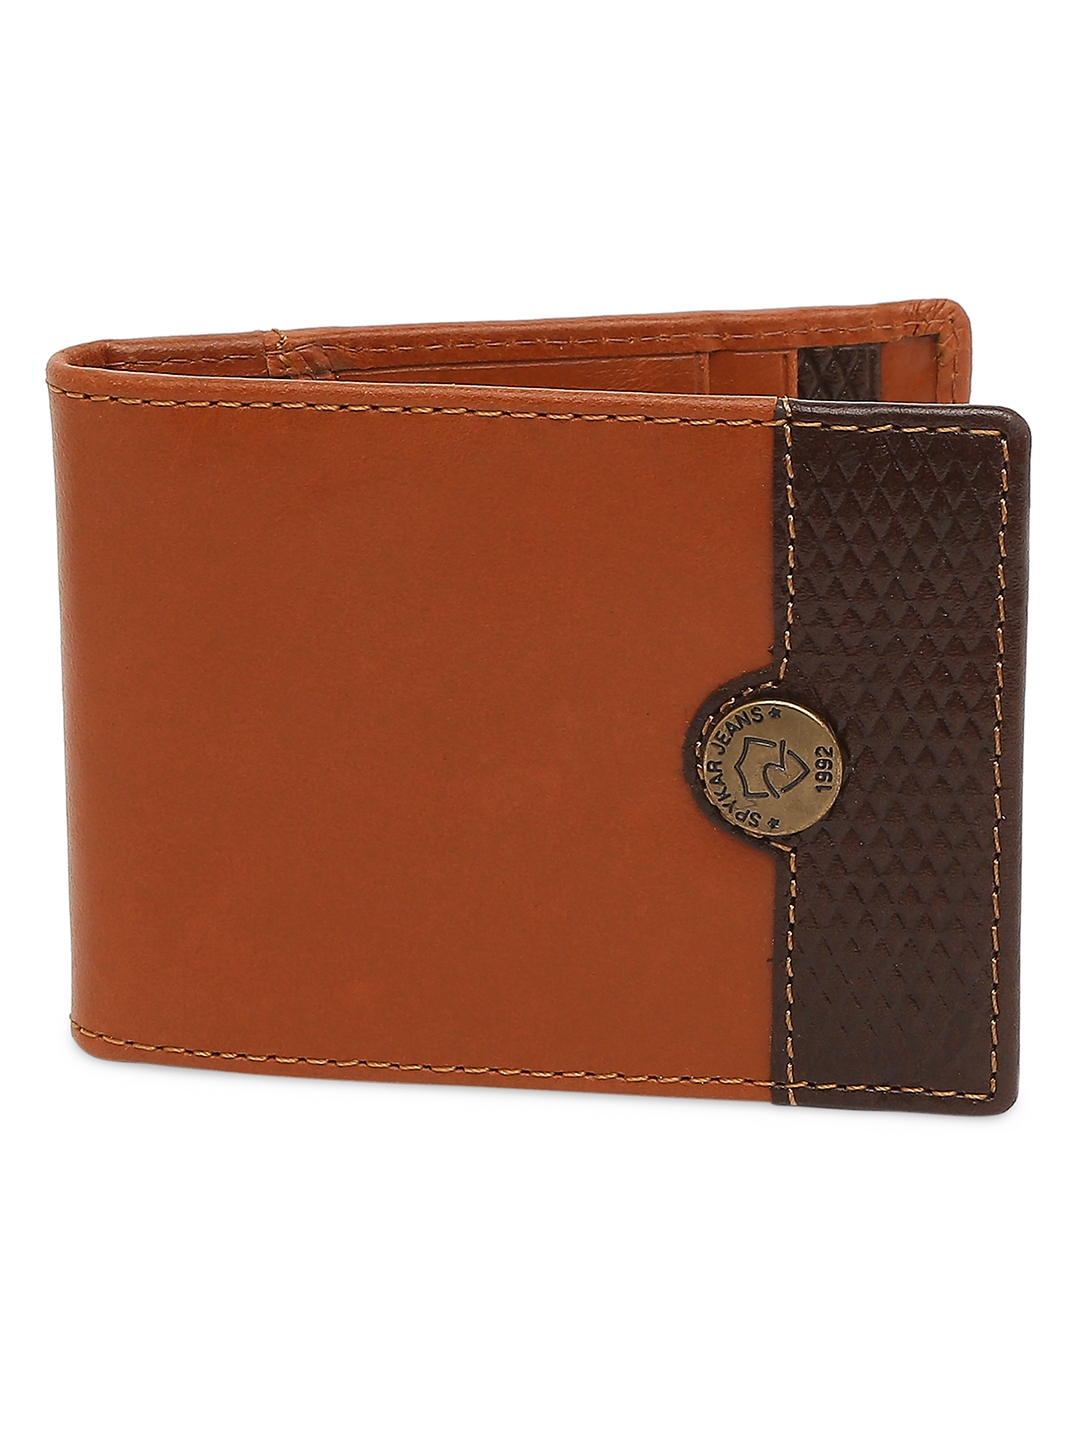 Spykar | Spykar Tan Leather Wallet